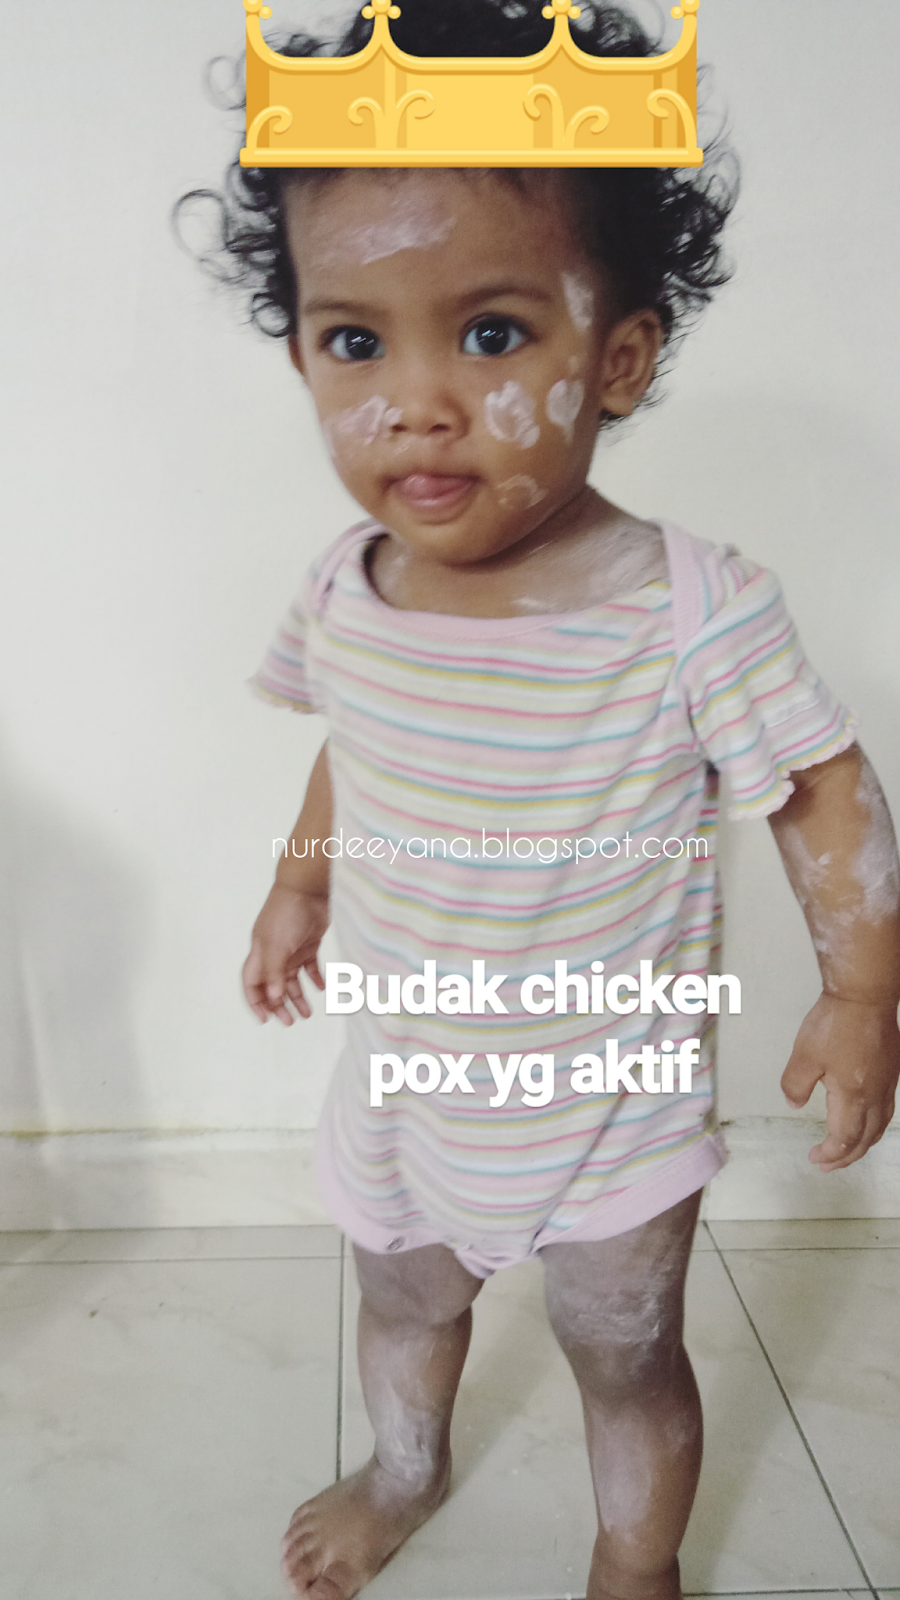 Nurdeeyana.blogspot.com: Chicken Pox (Part 2)